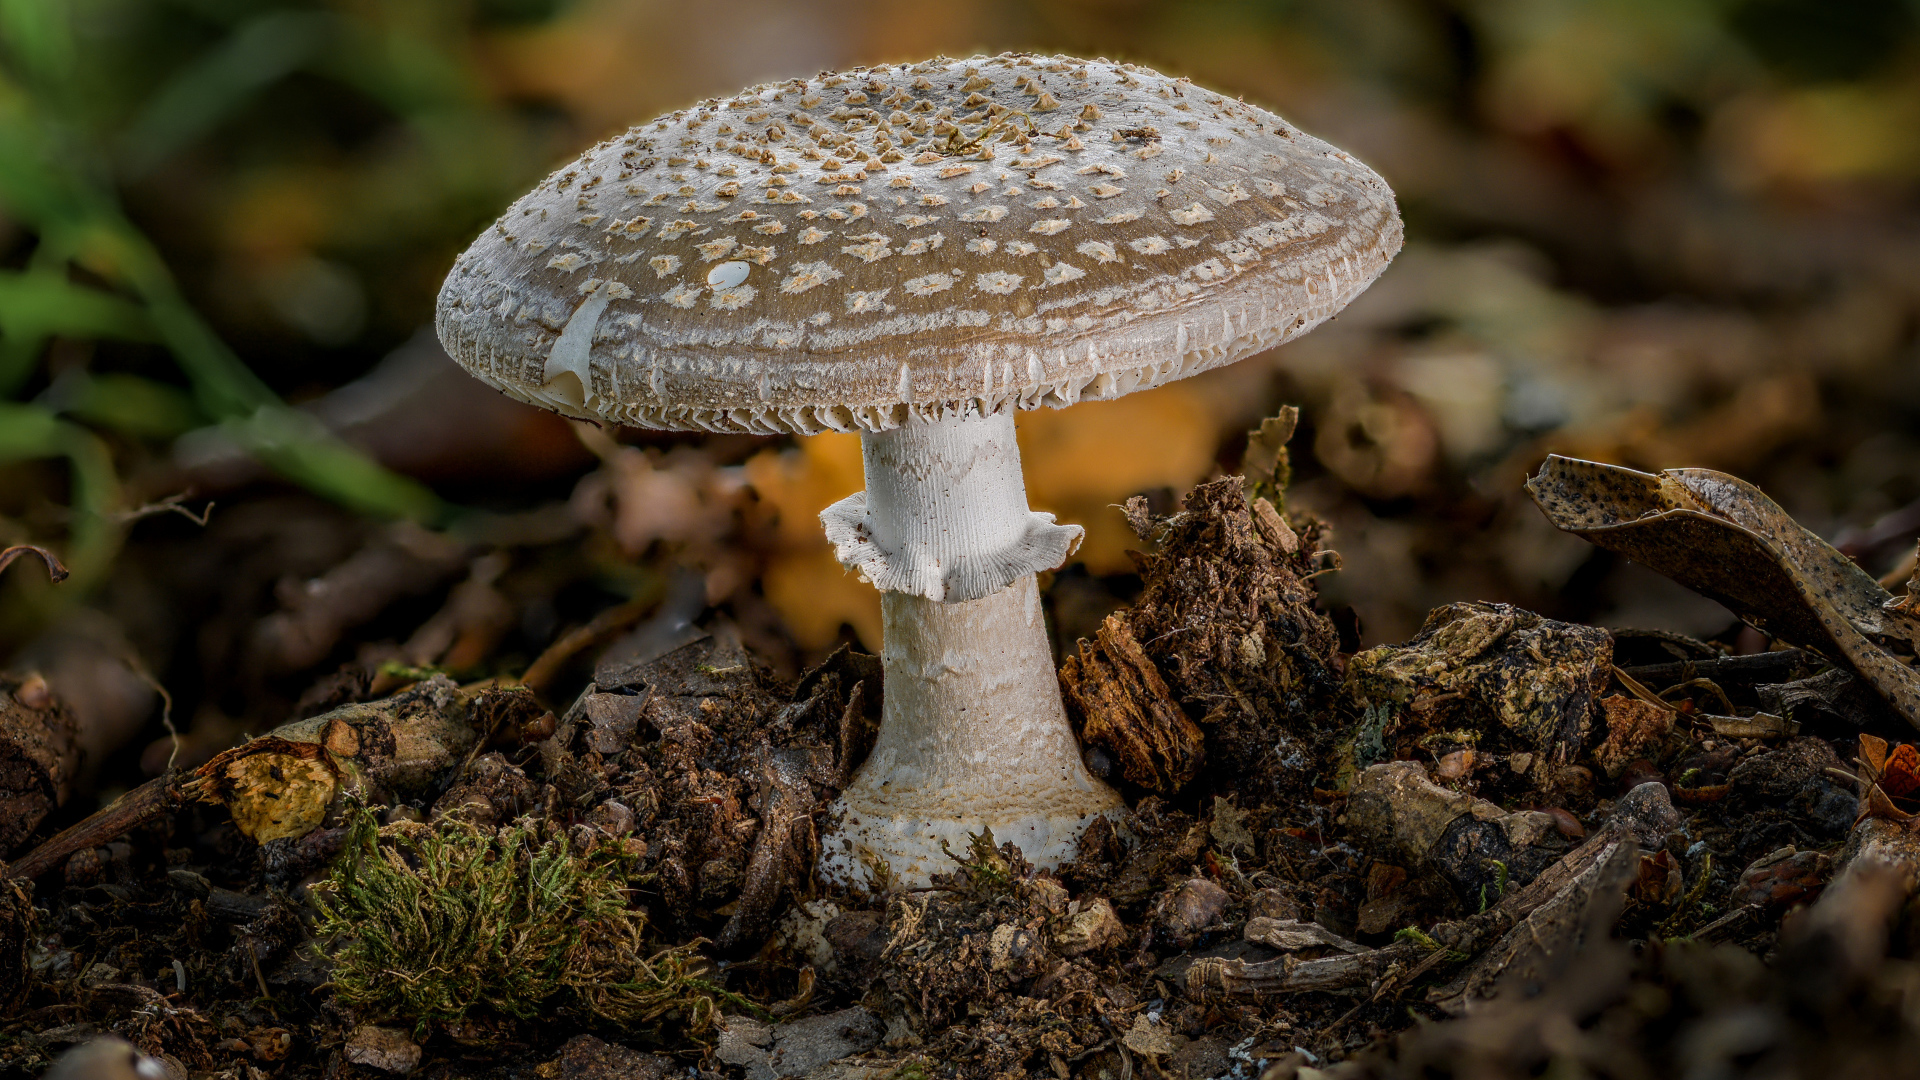 Amanita mushroom in loose soil in the forest